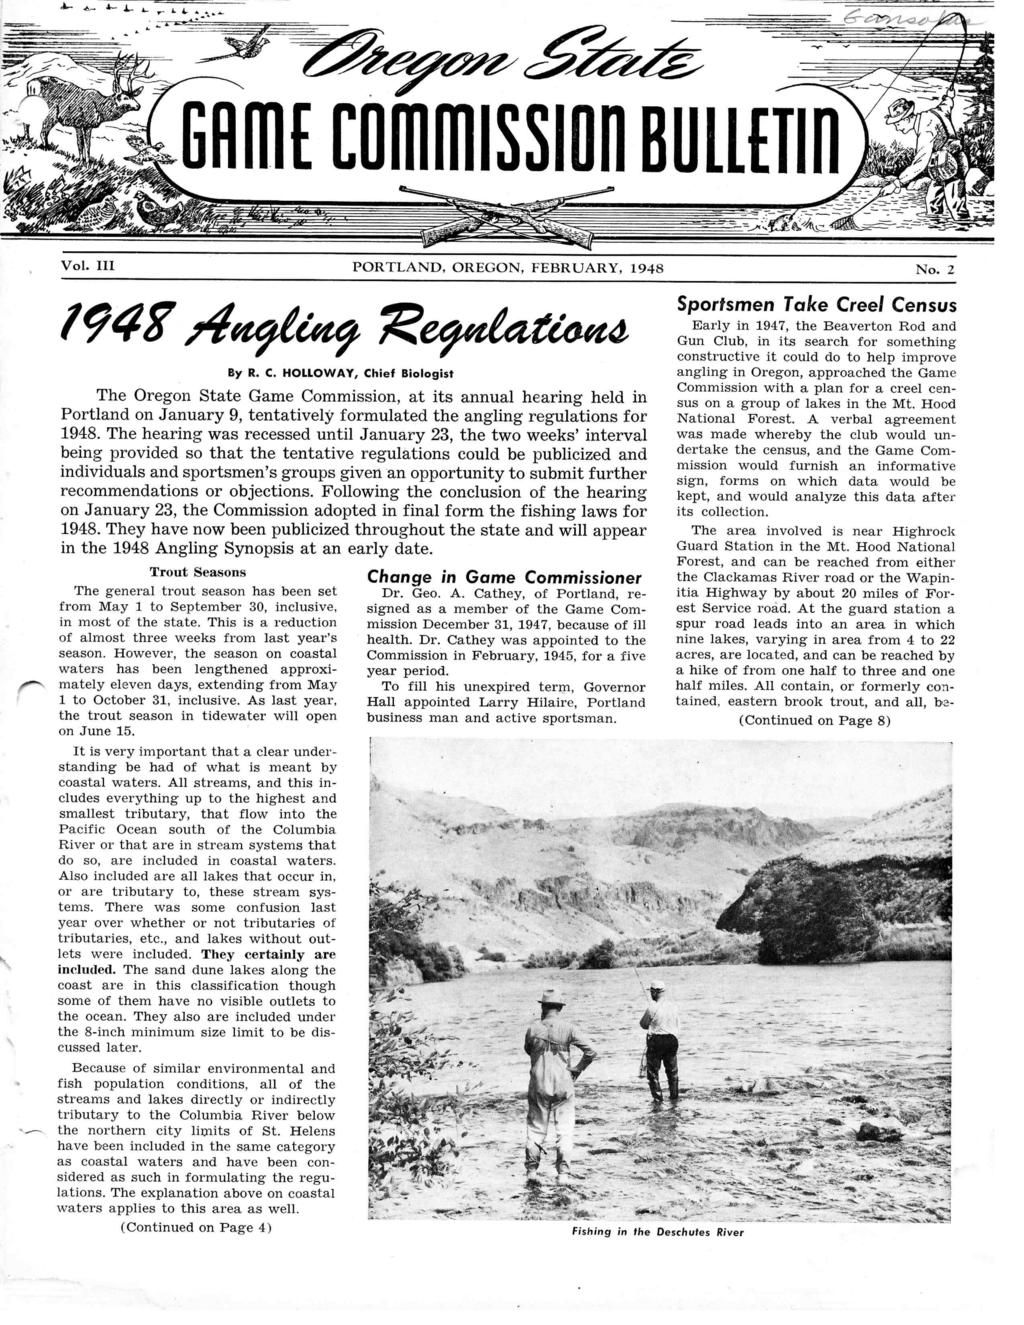 Glimt commission BUILET111 Vol. III PORTLAND, OREGON, FEBRUARY, 1948 No. 2 /948 7iptc/ea9 Rerreateepta By R. C.